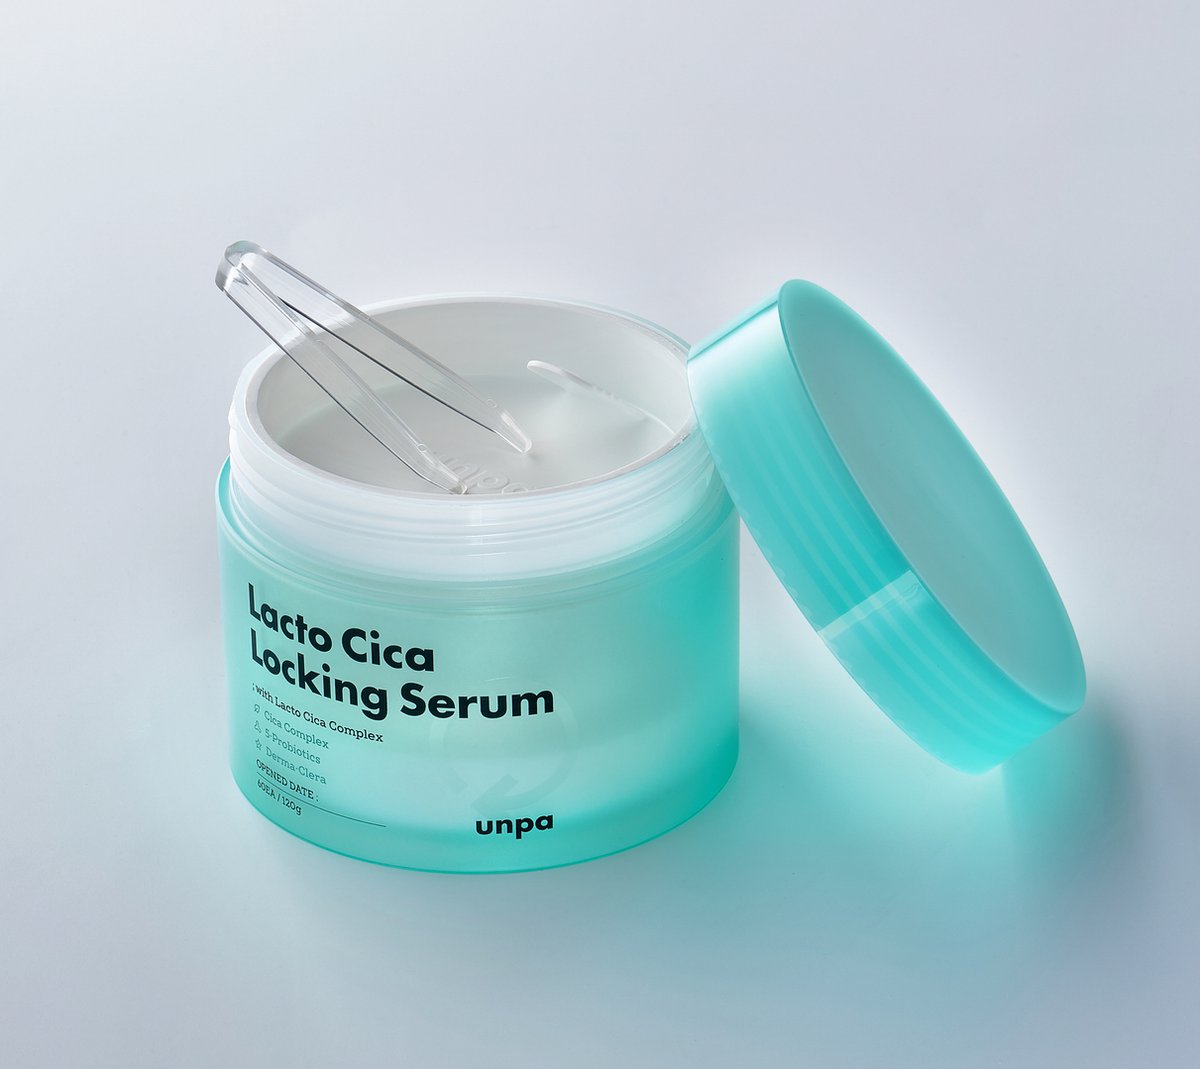 Unpa - Lacto Cica Locking Serum 120 g - Vergrendelend Serum - Gezichtsserum - Face Serum - Tegen mee-eters en grove poriën - Against blackheads and coarse pores - Celvernieuwing - Renewal - Herstellend Serum - Repair Serum - Anti Acne